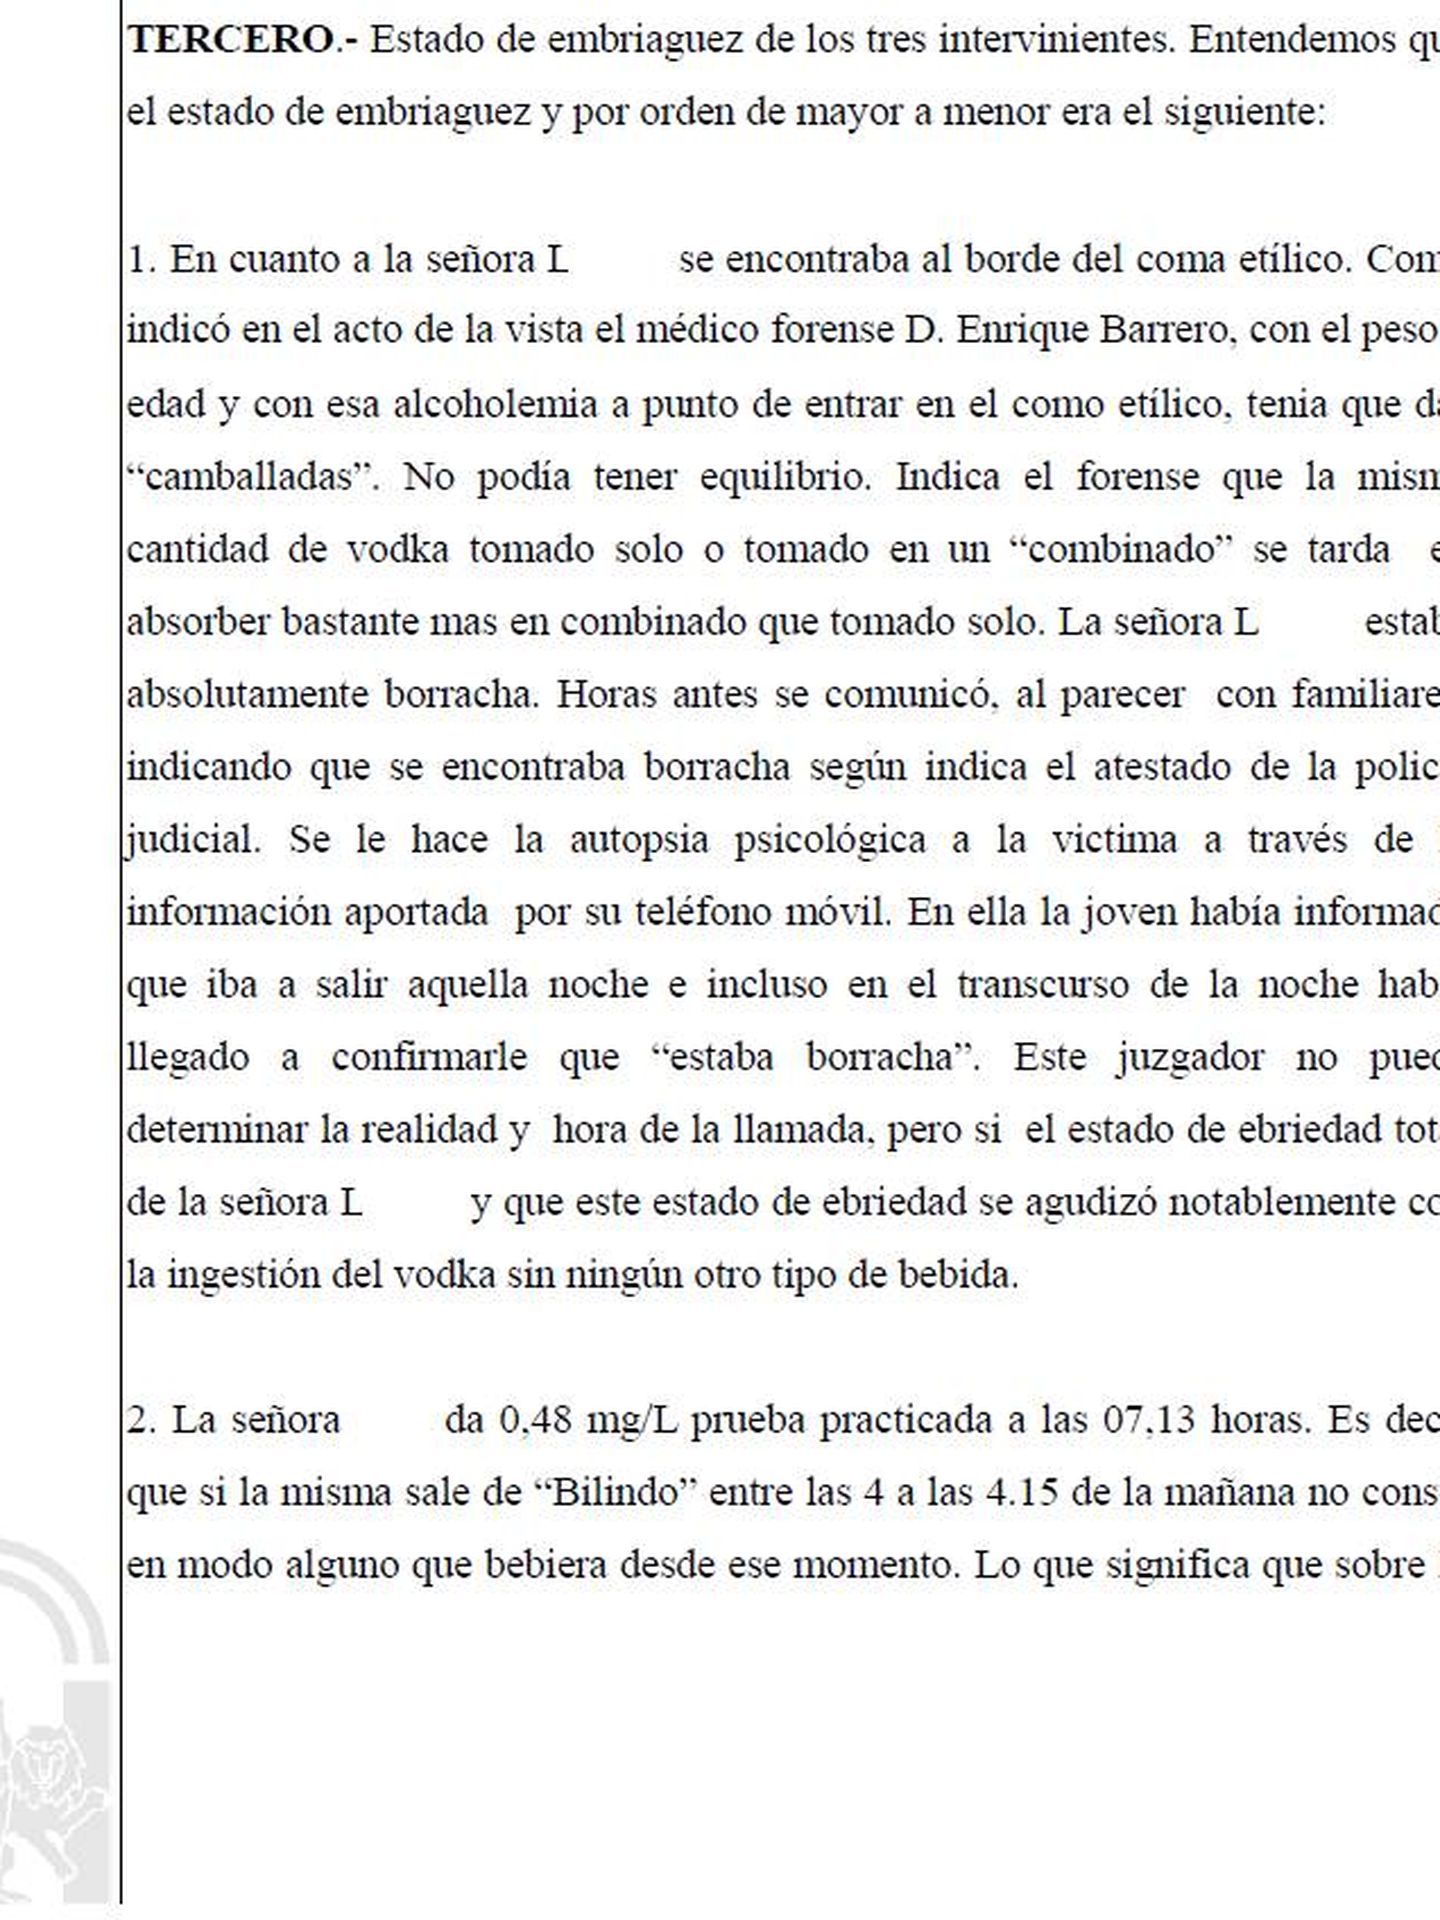 Extracto de la sentencia del tribunal de Sevilla que condenó a M. Blanco Vela